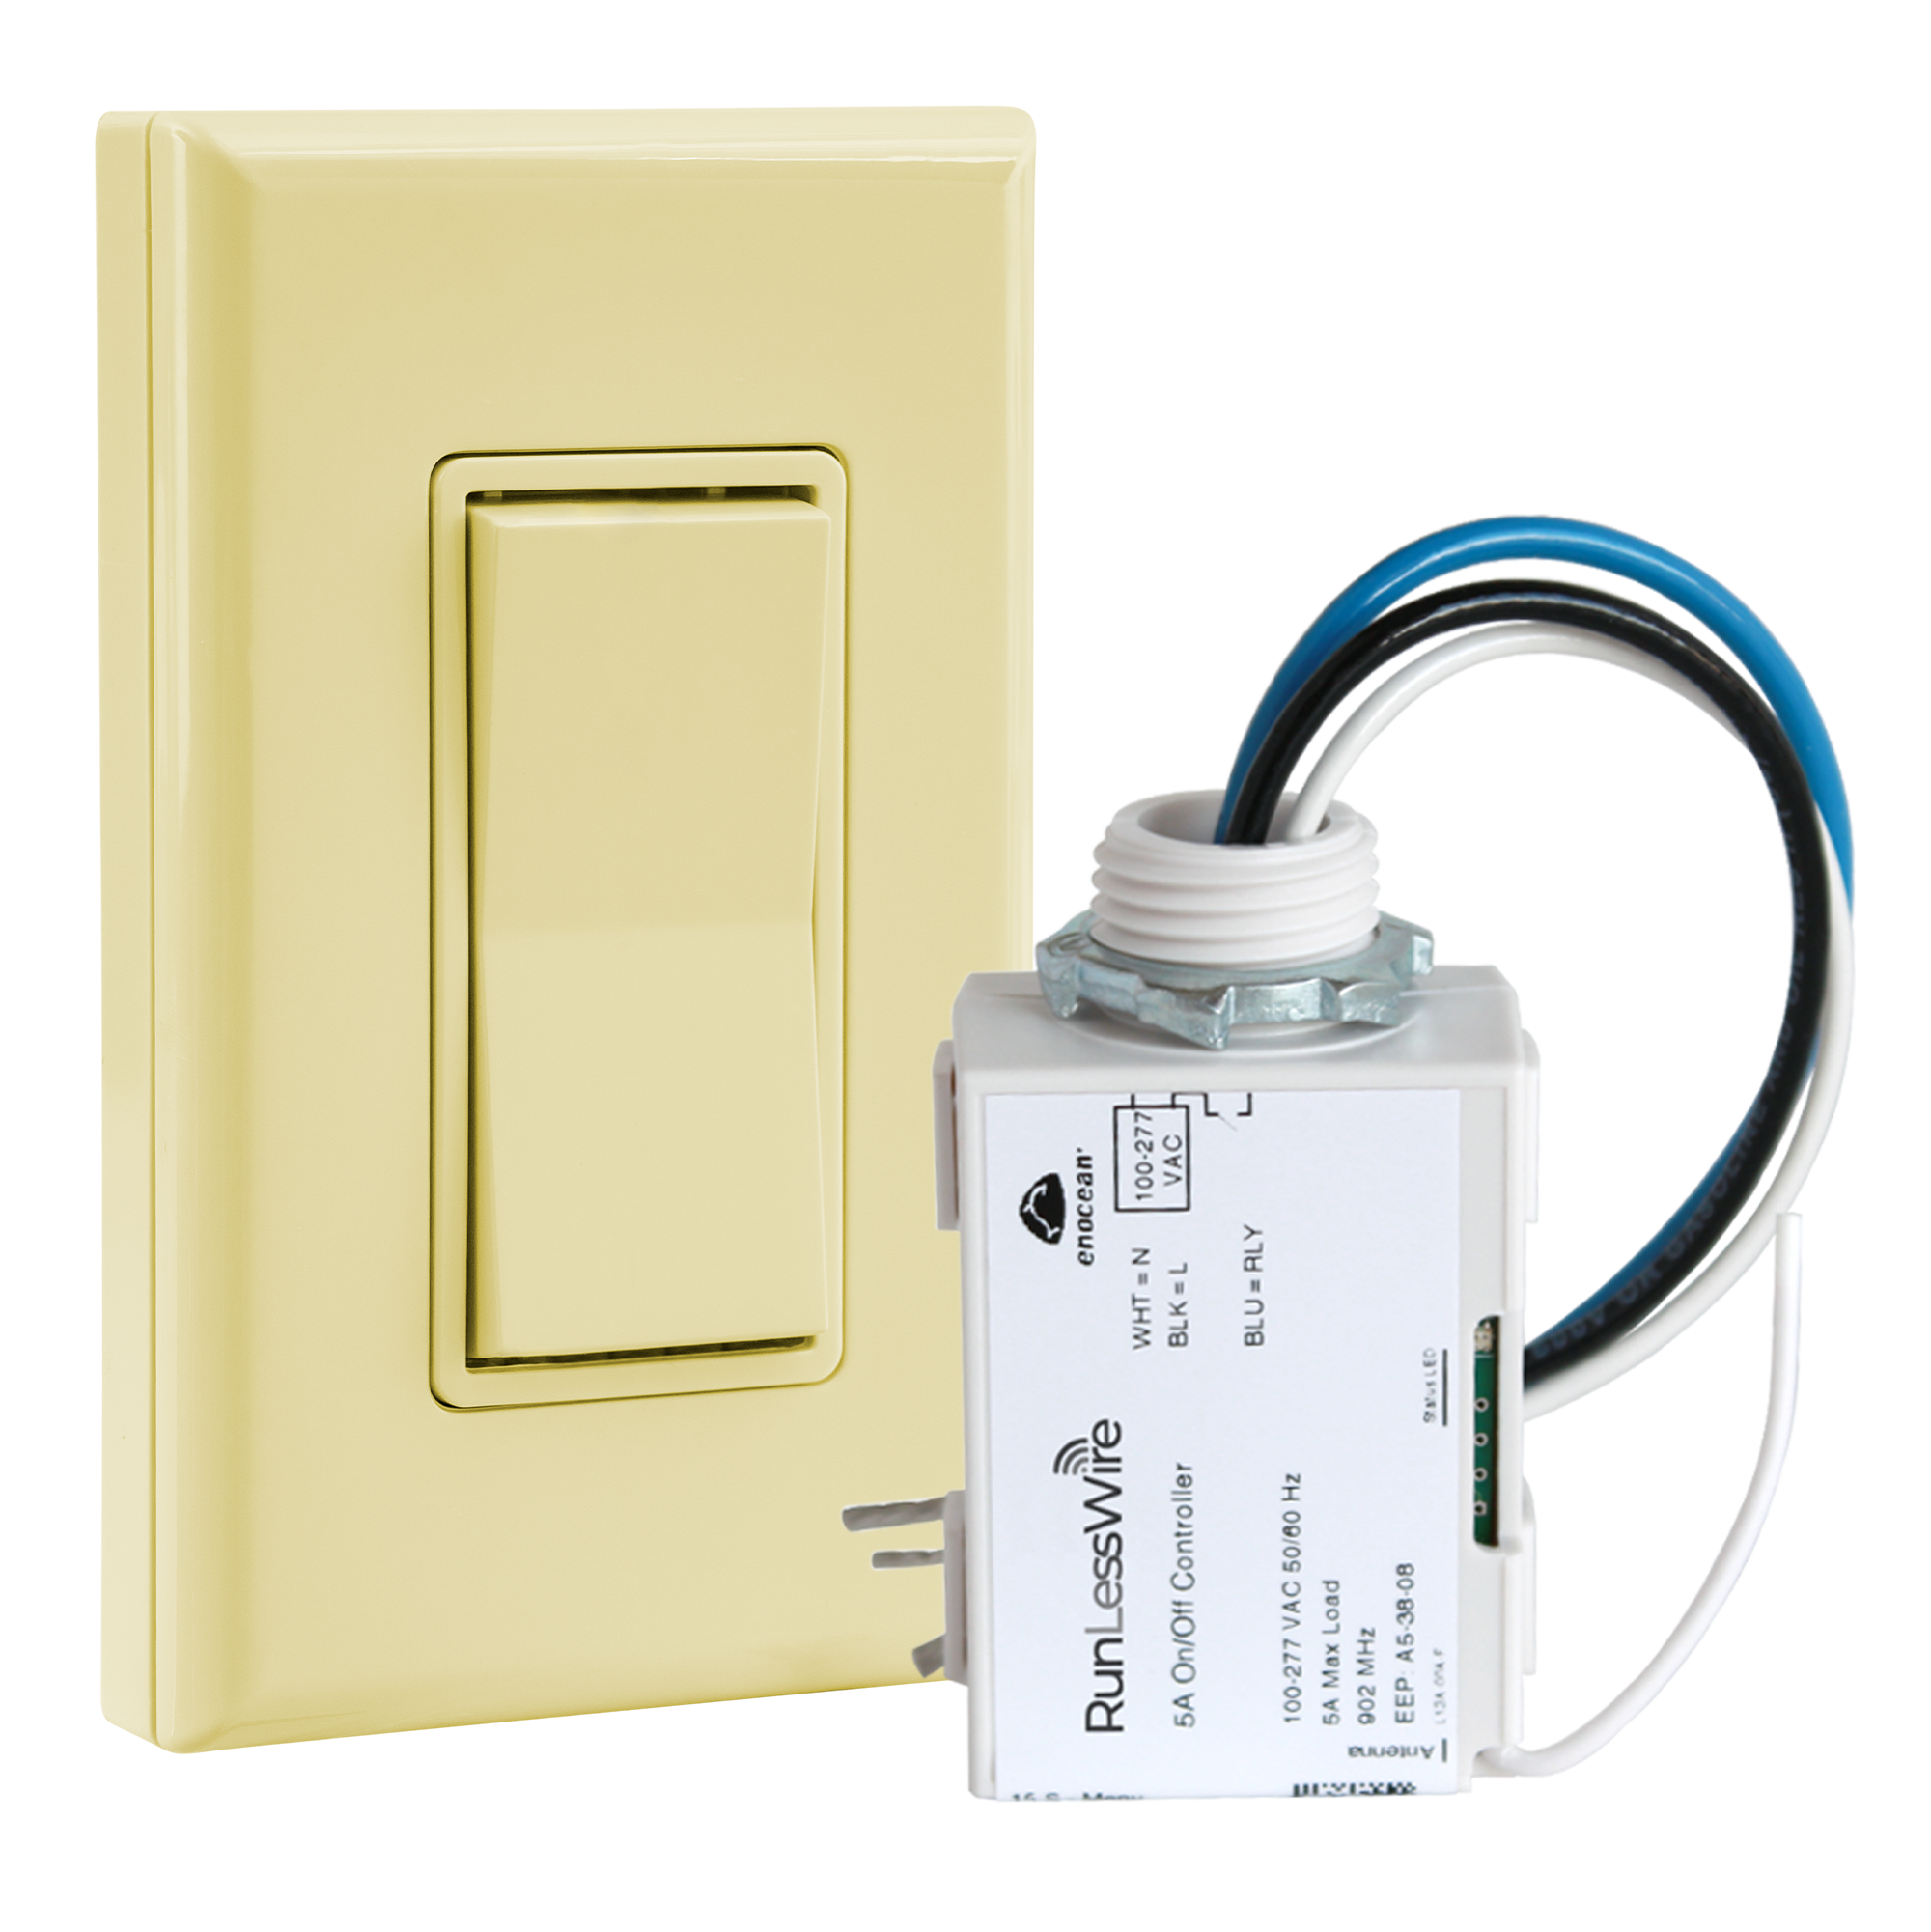 Basic Wireless Light Switch Kit – 1 Controller, 1 Light Switch